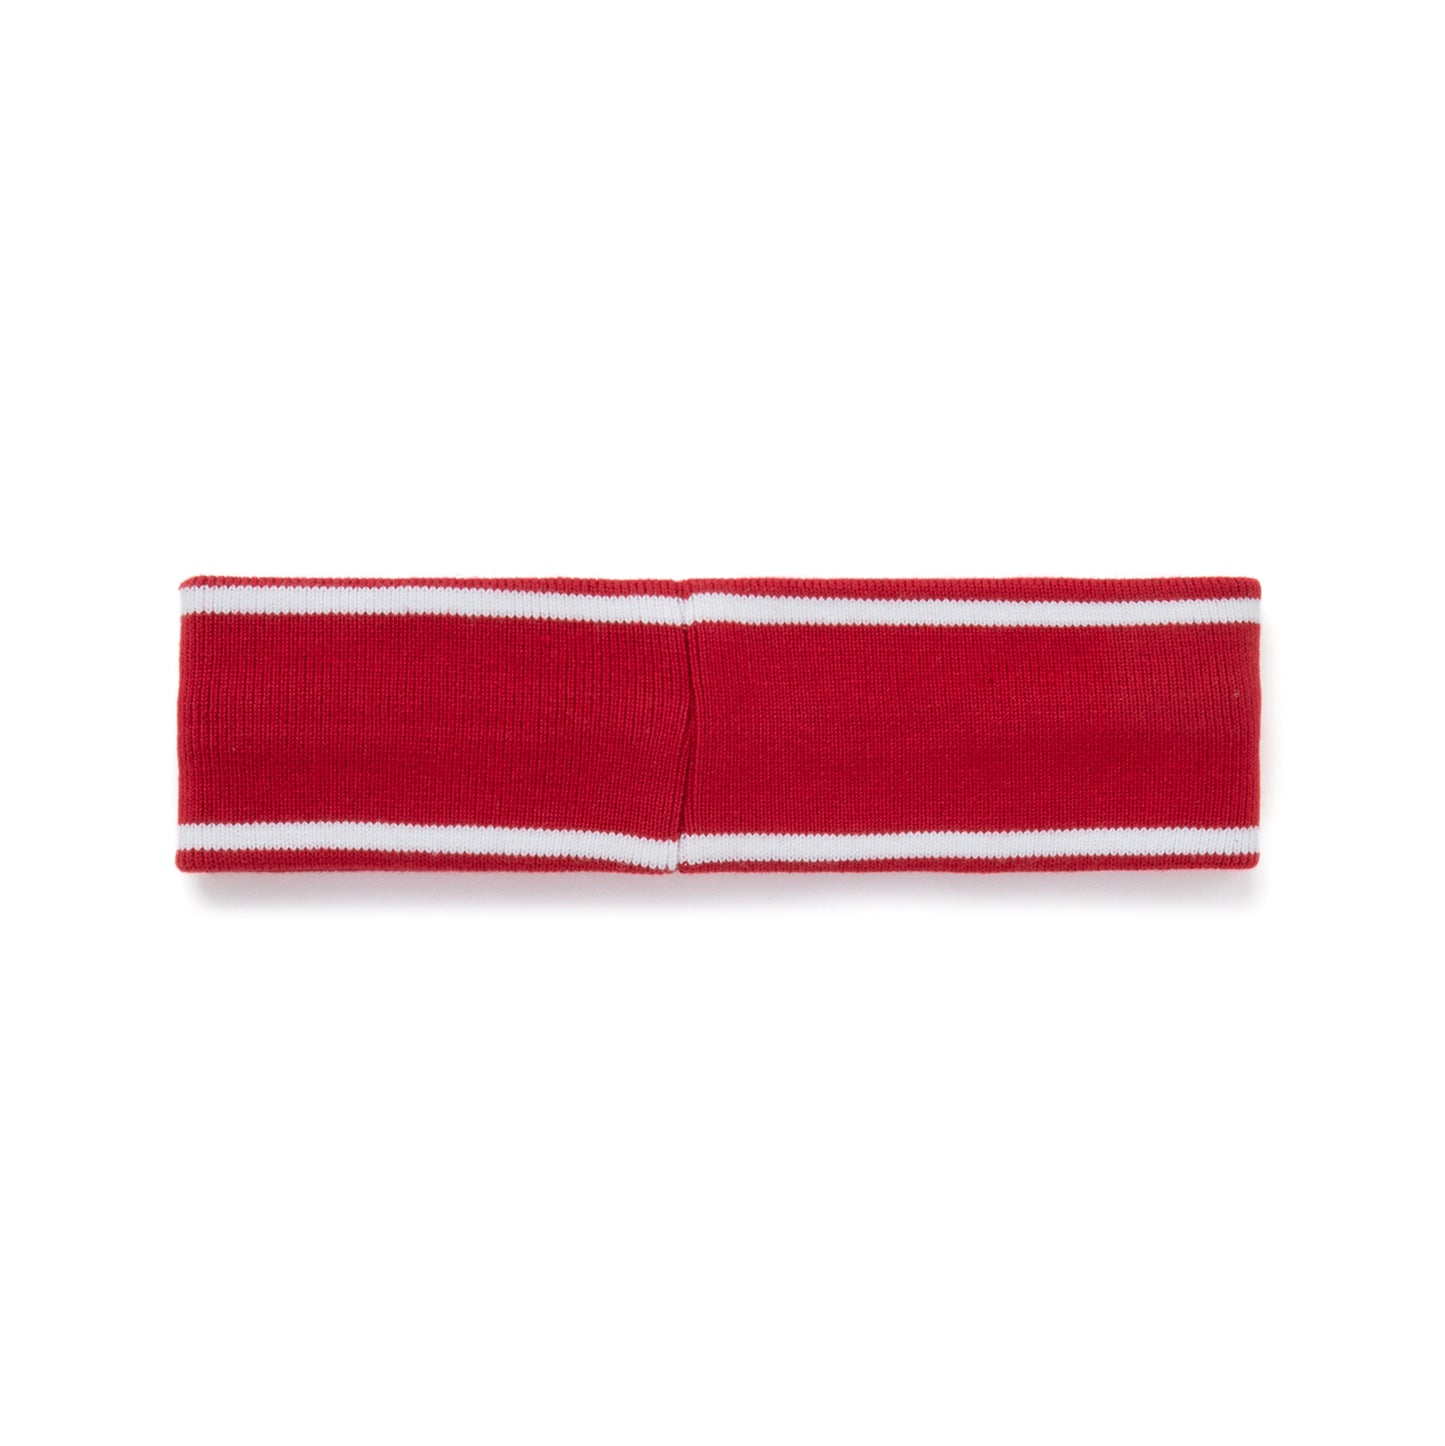 A Bathing Ape BAPESTA Headband (Red)